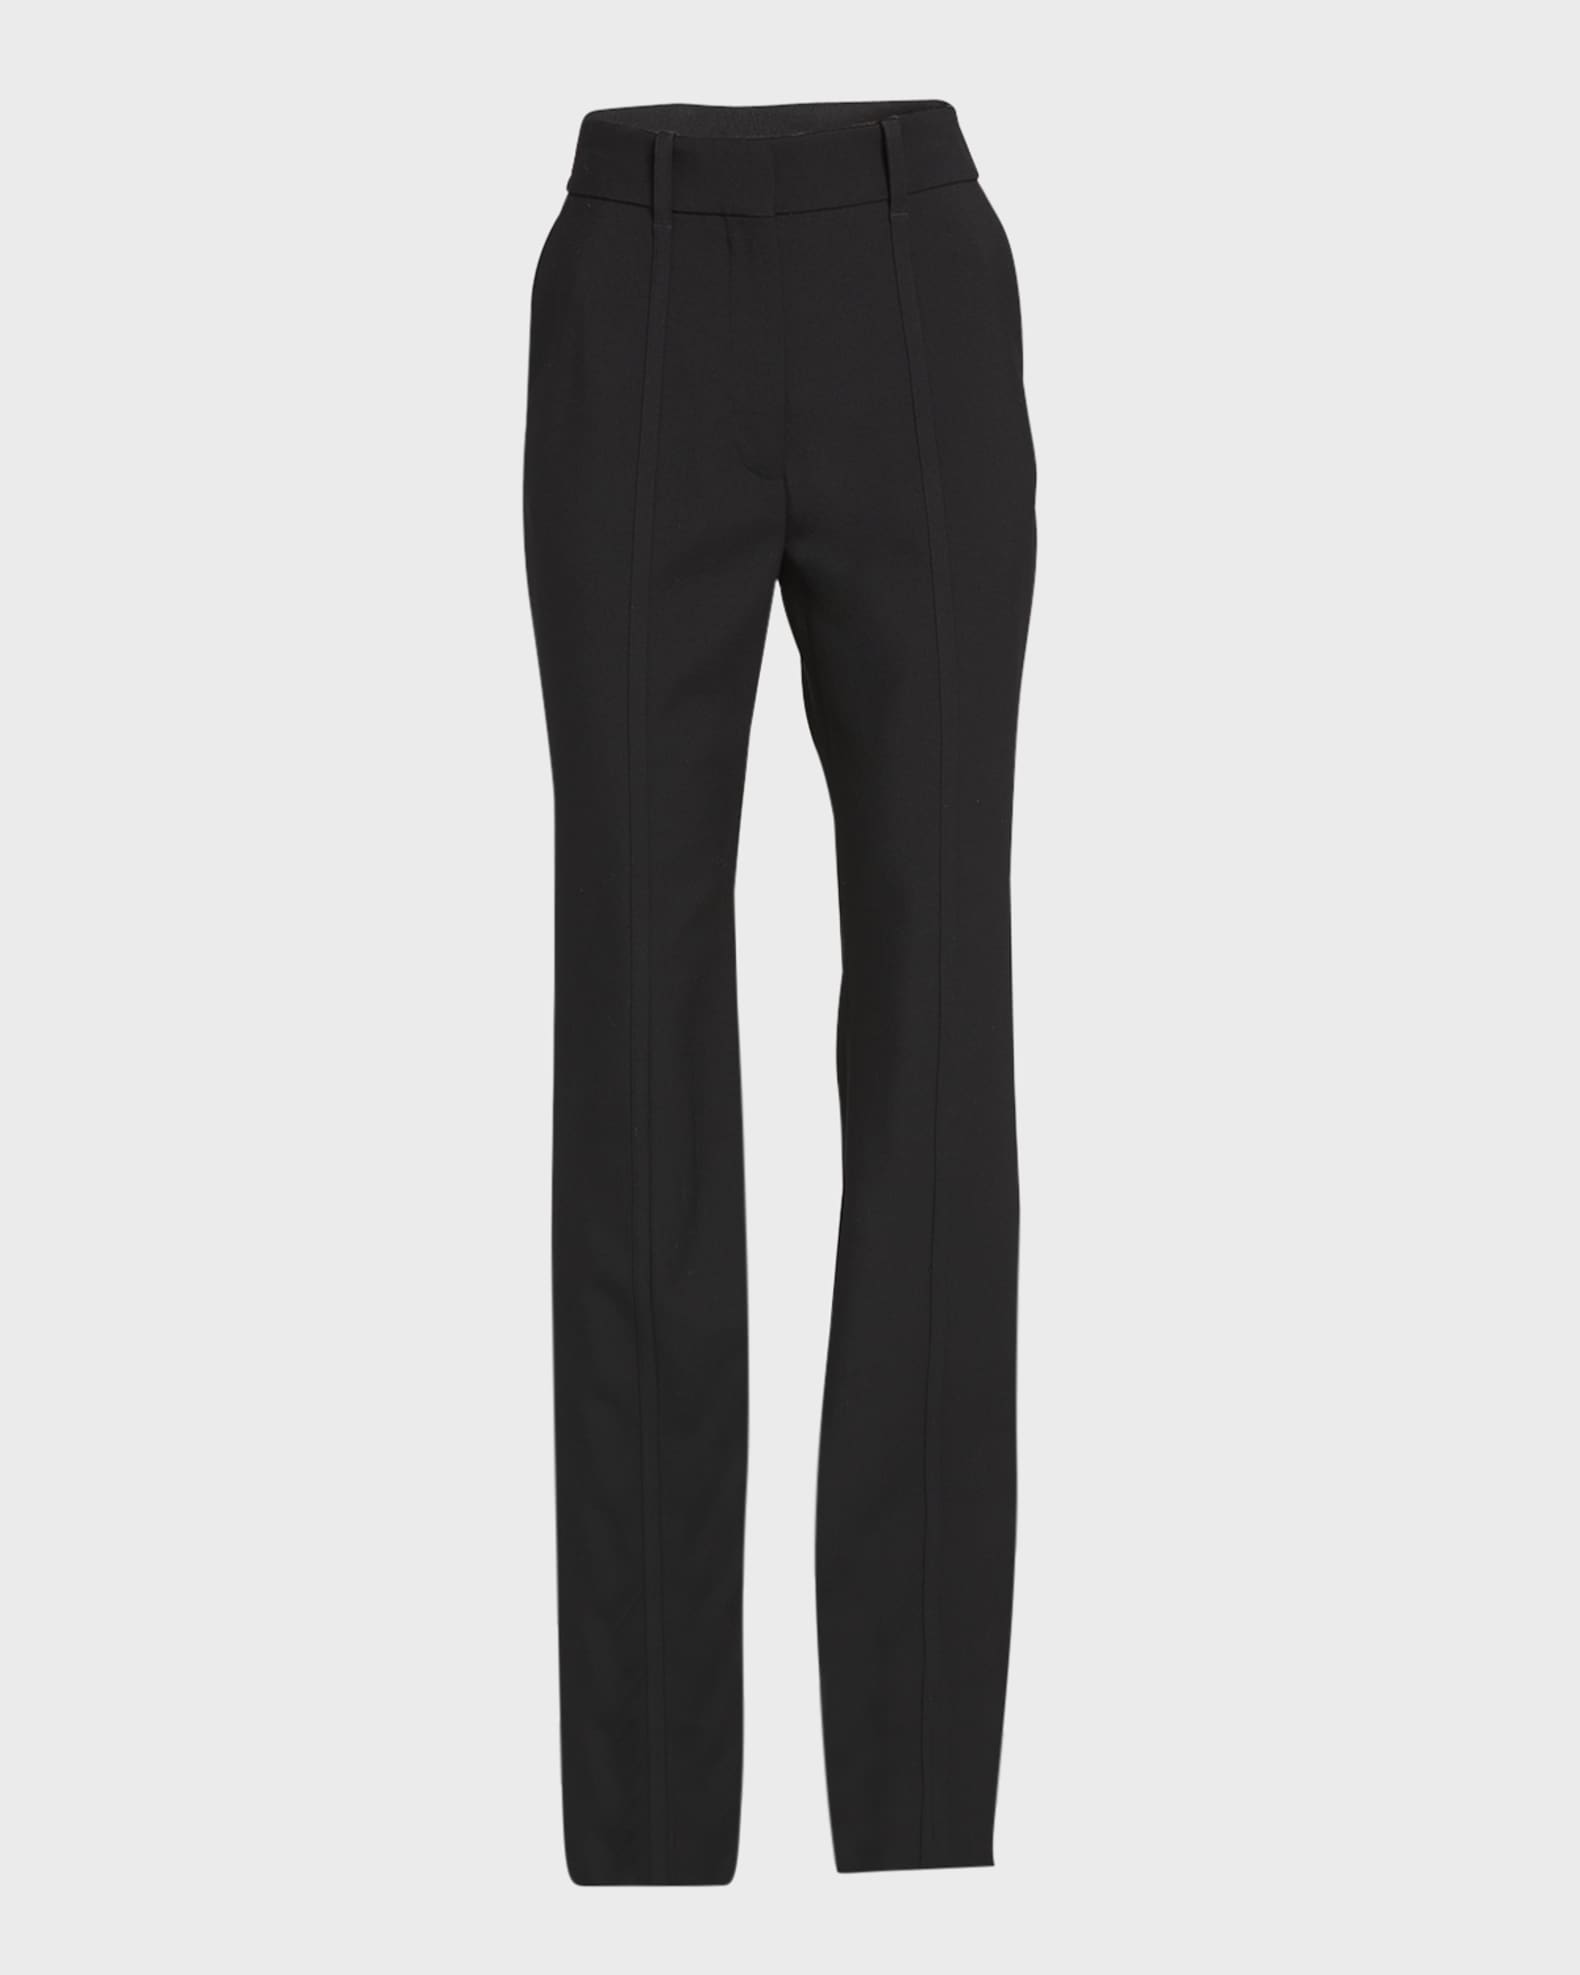 ALAÏA Women's Black Tailored Bootcut Wool Pant